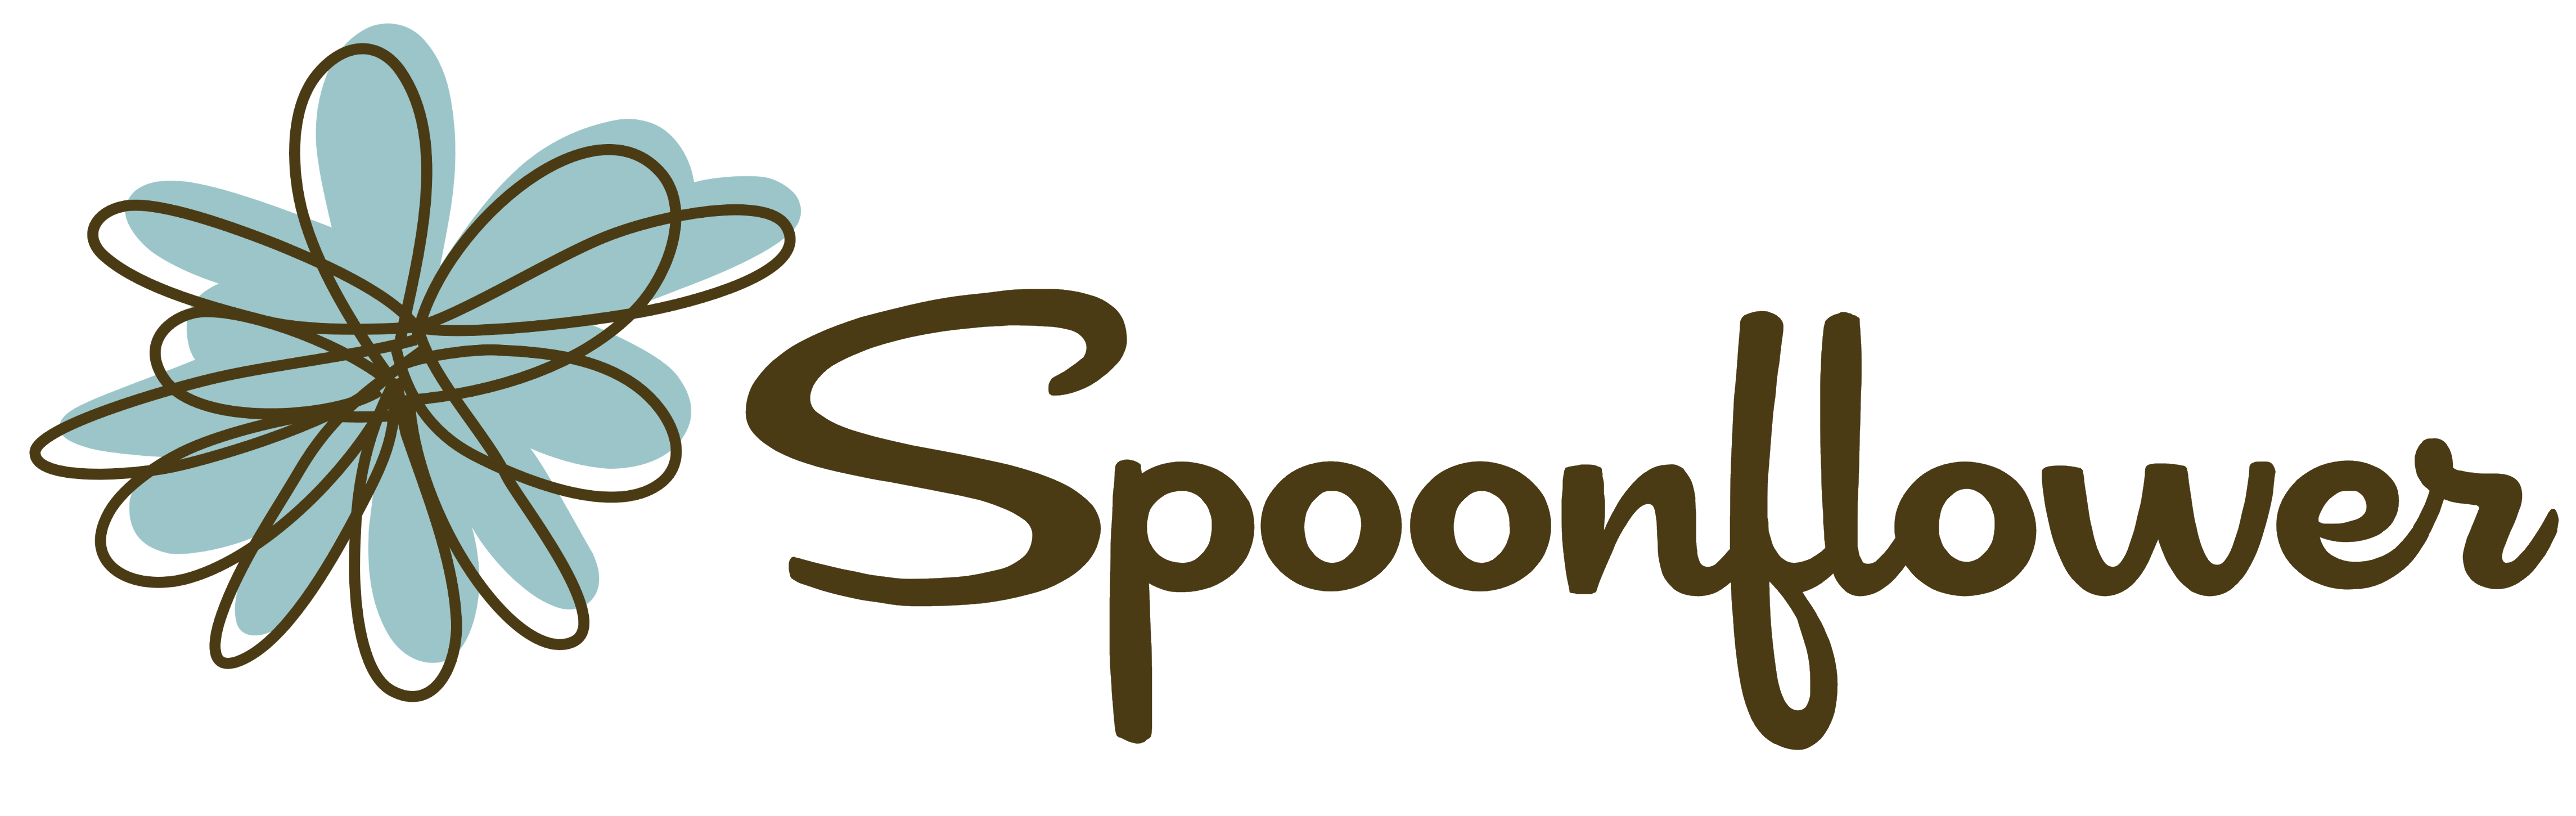 Spoonflower logo, logotype